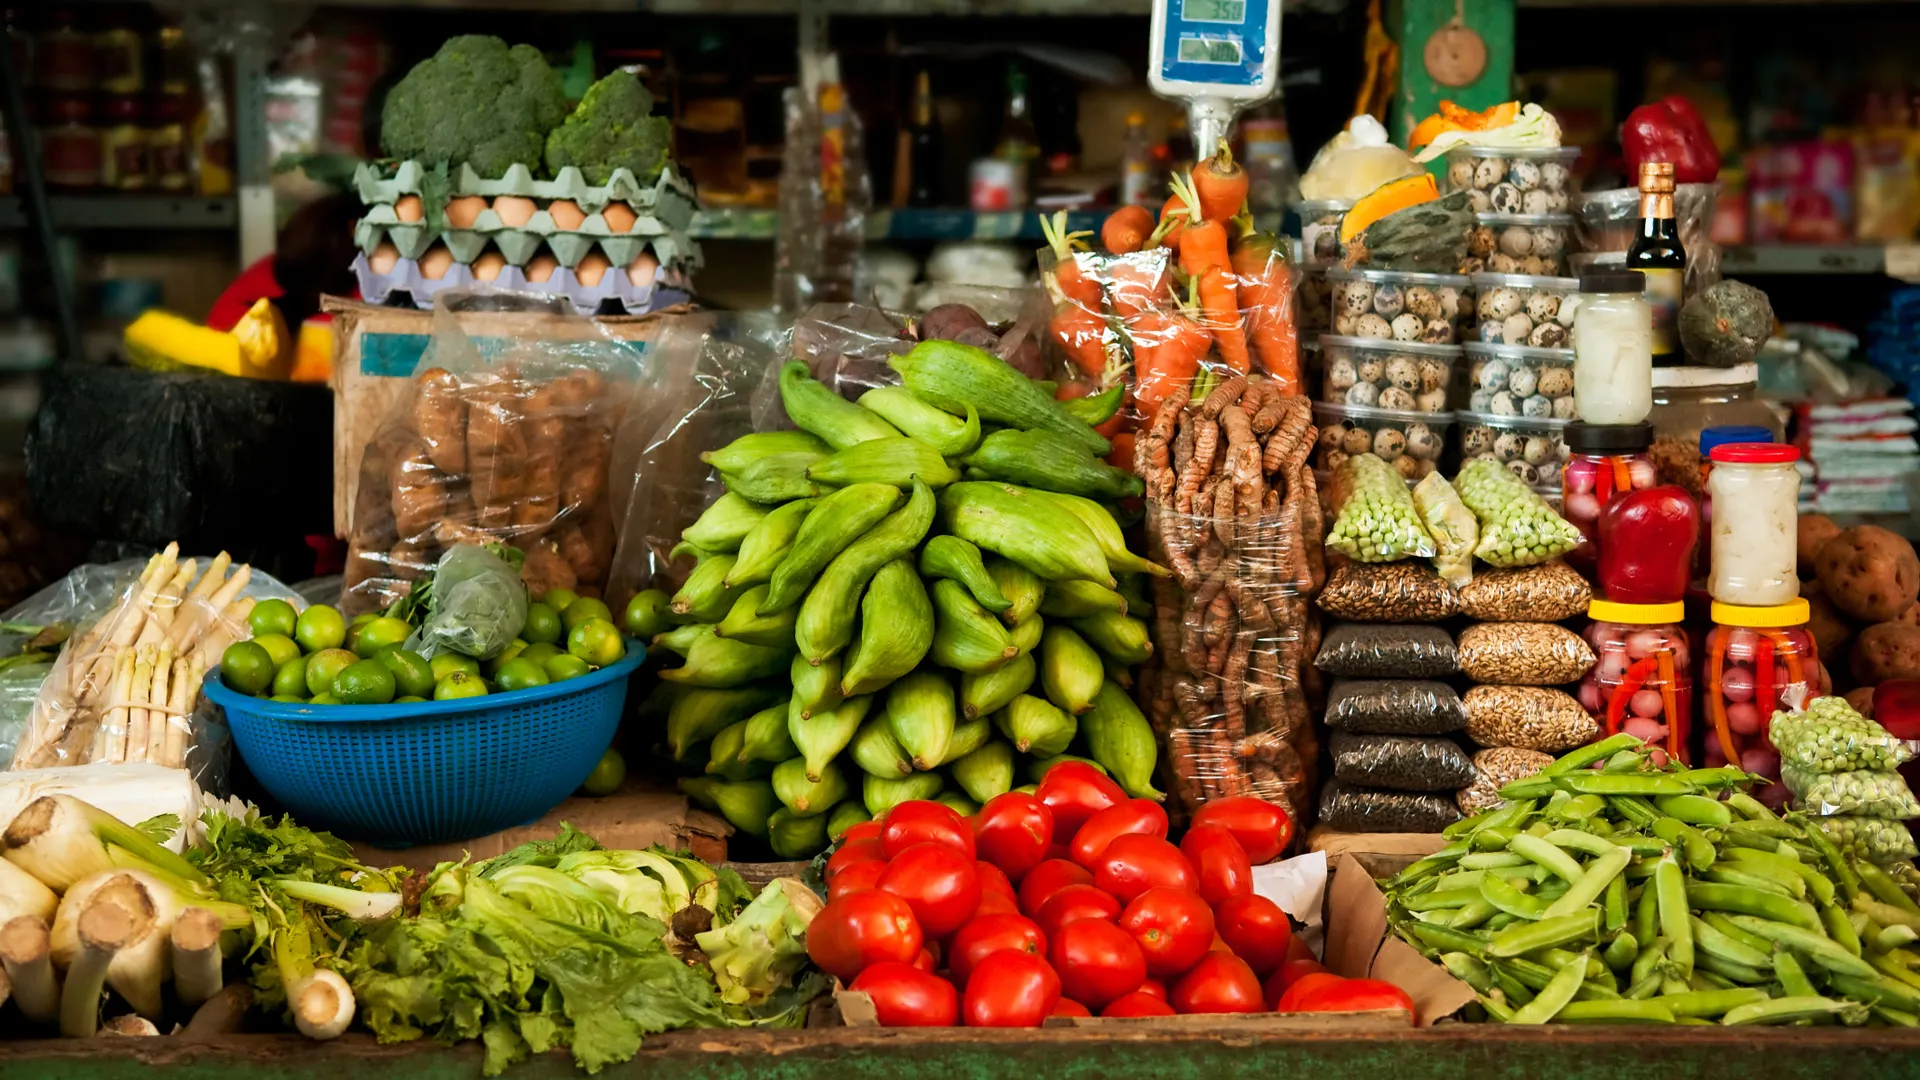 Mercado Central in Peru, south_america | Organic Food,Groceries,Fruit & Vegetable,Herbs,Meat - Country Helper